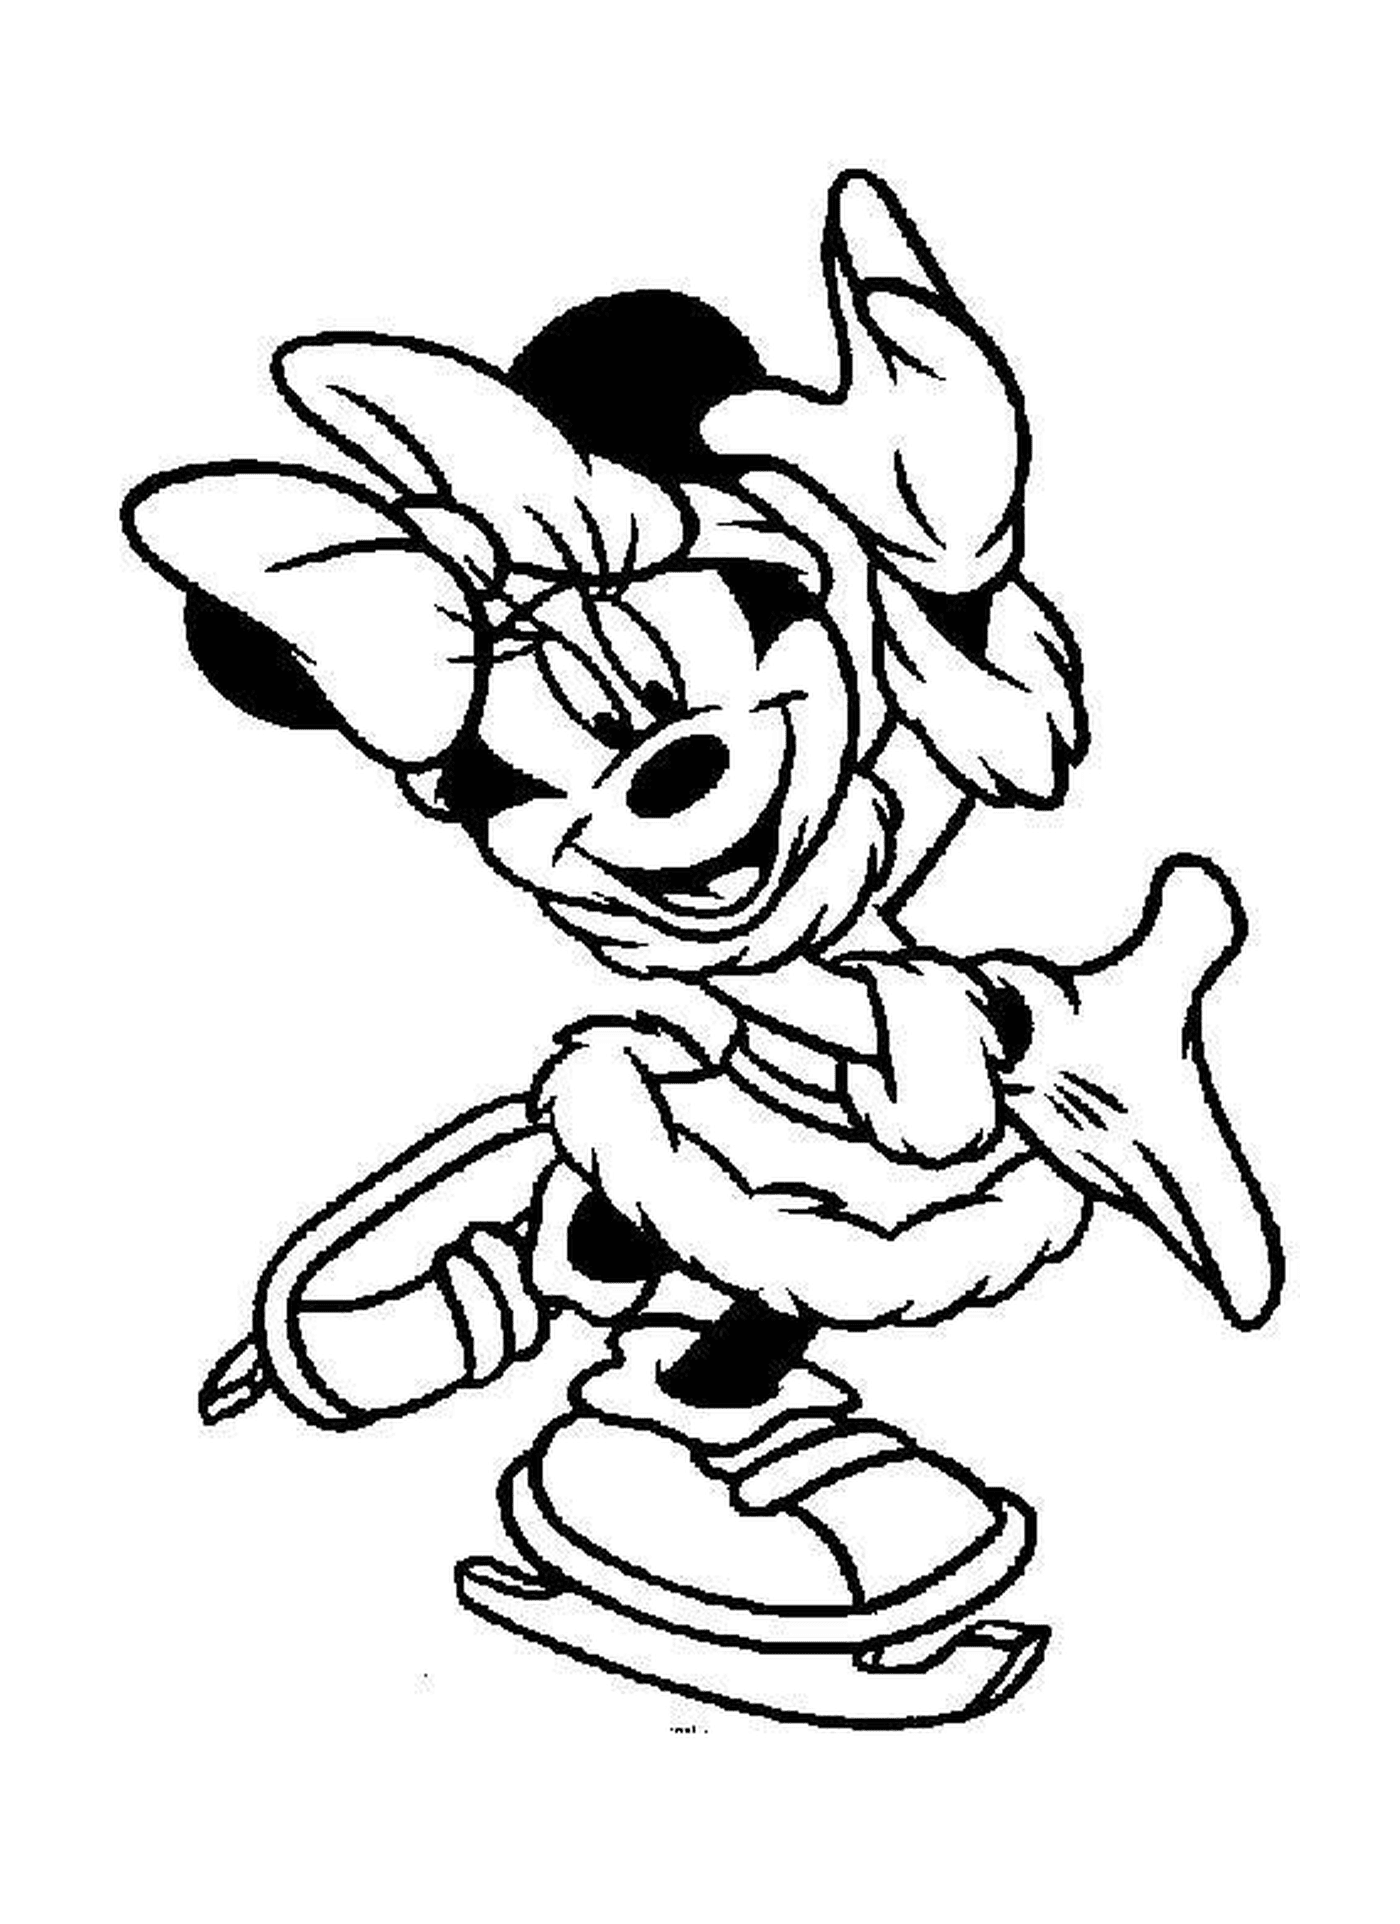   Minnie Mouse souriante 